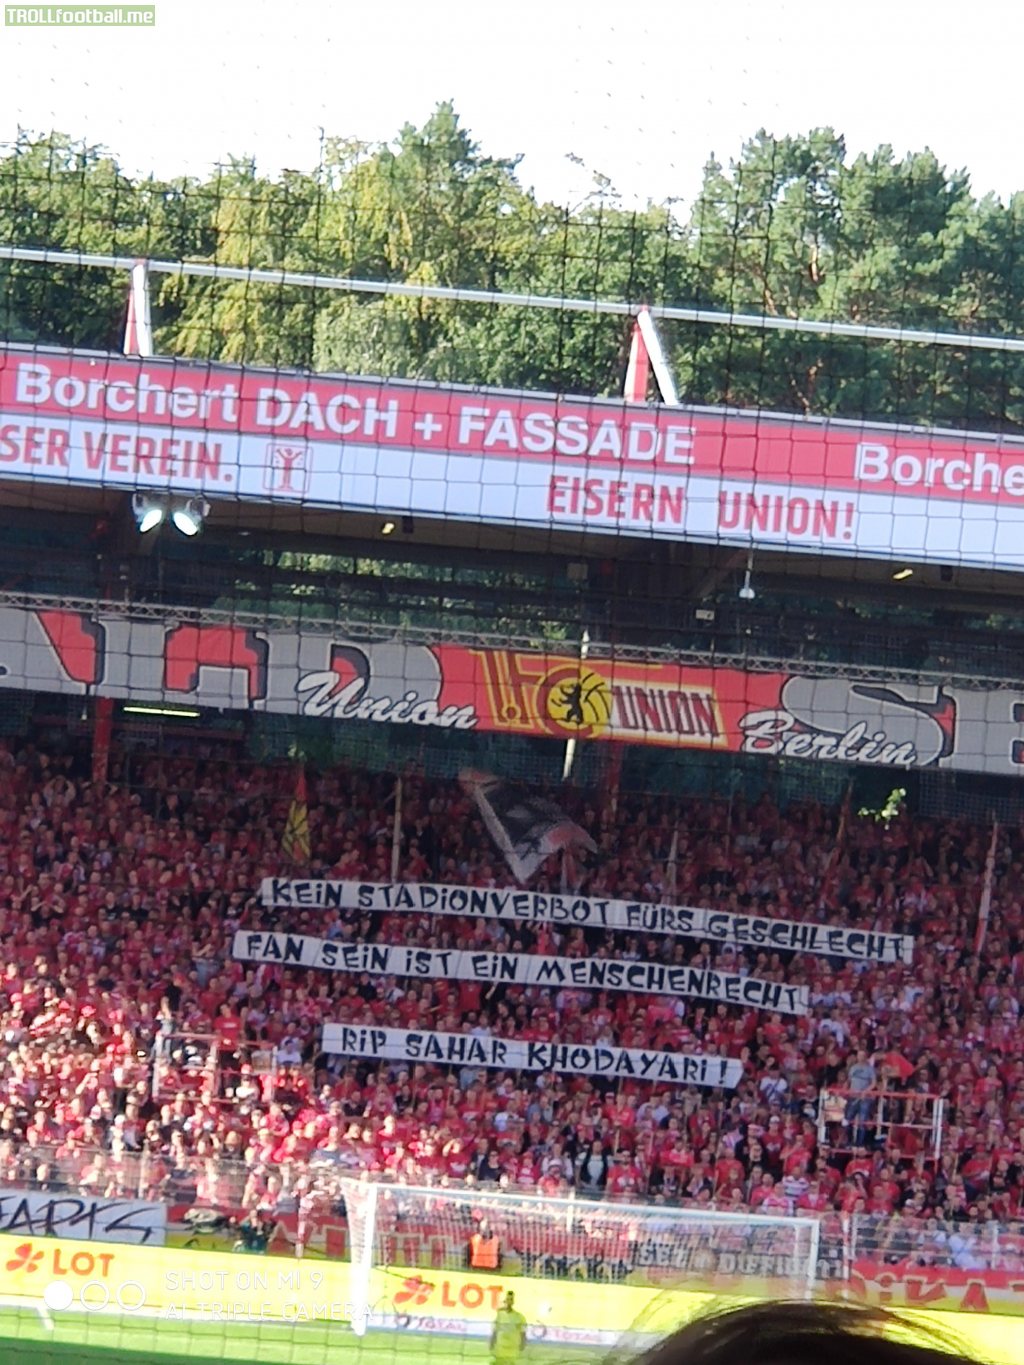 No stadium ban for gender, being a fan is a human right RIP SAHAR KHODAYARI! Game: Union Berlin vs. Werder Bremen